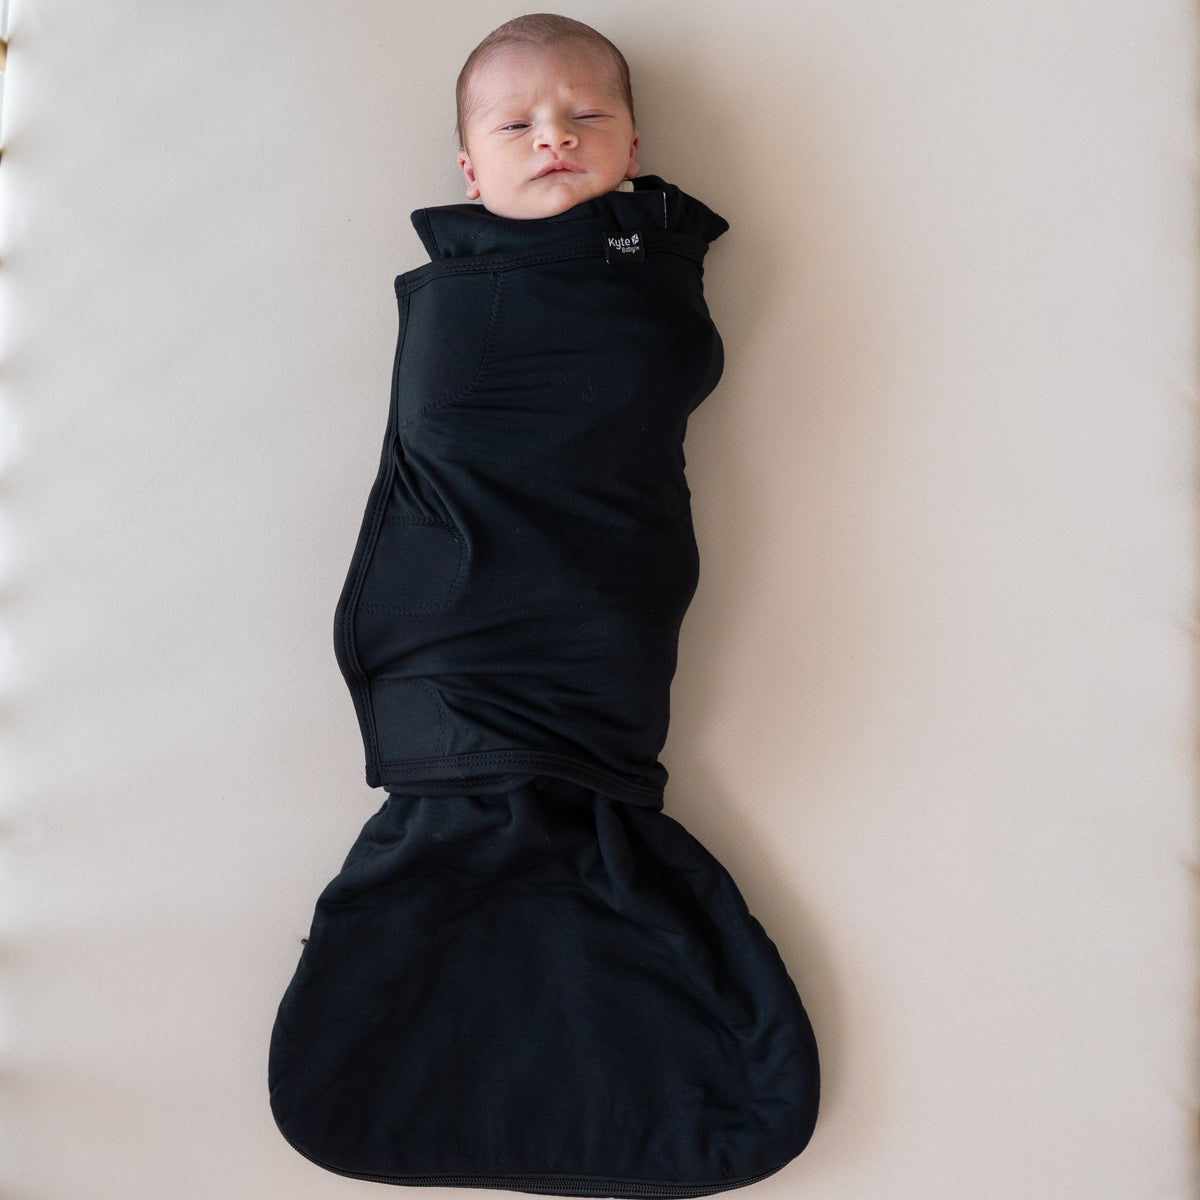 Baby wearing Kyte Baby Sleep Bag Swaddler in Midnight black